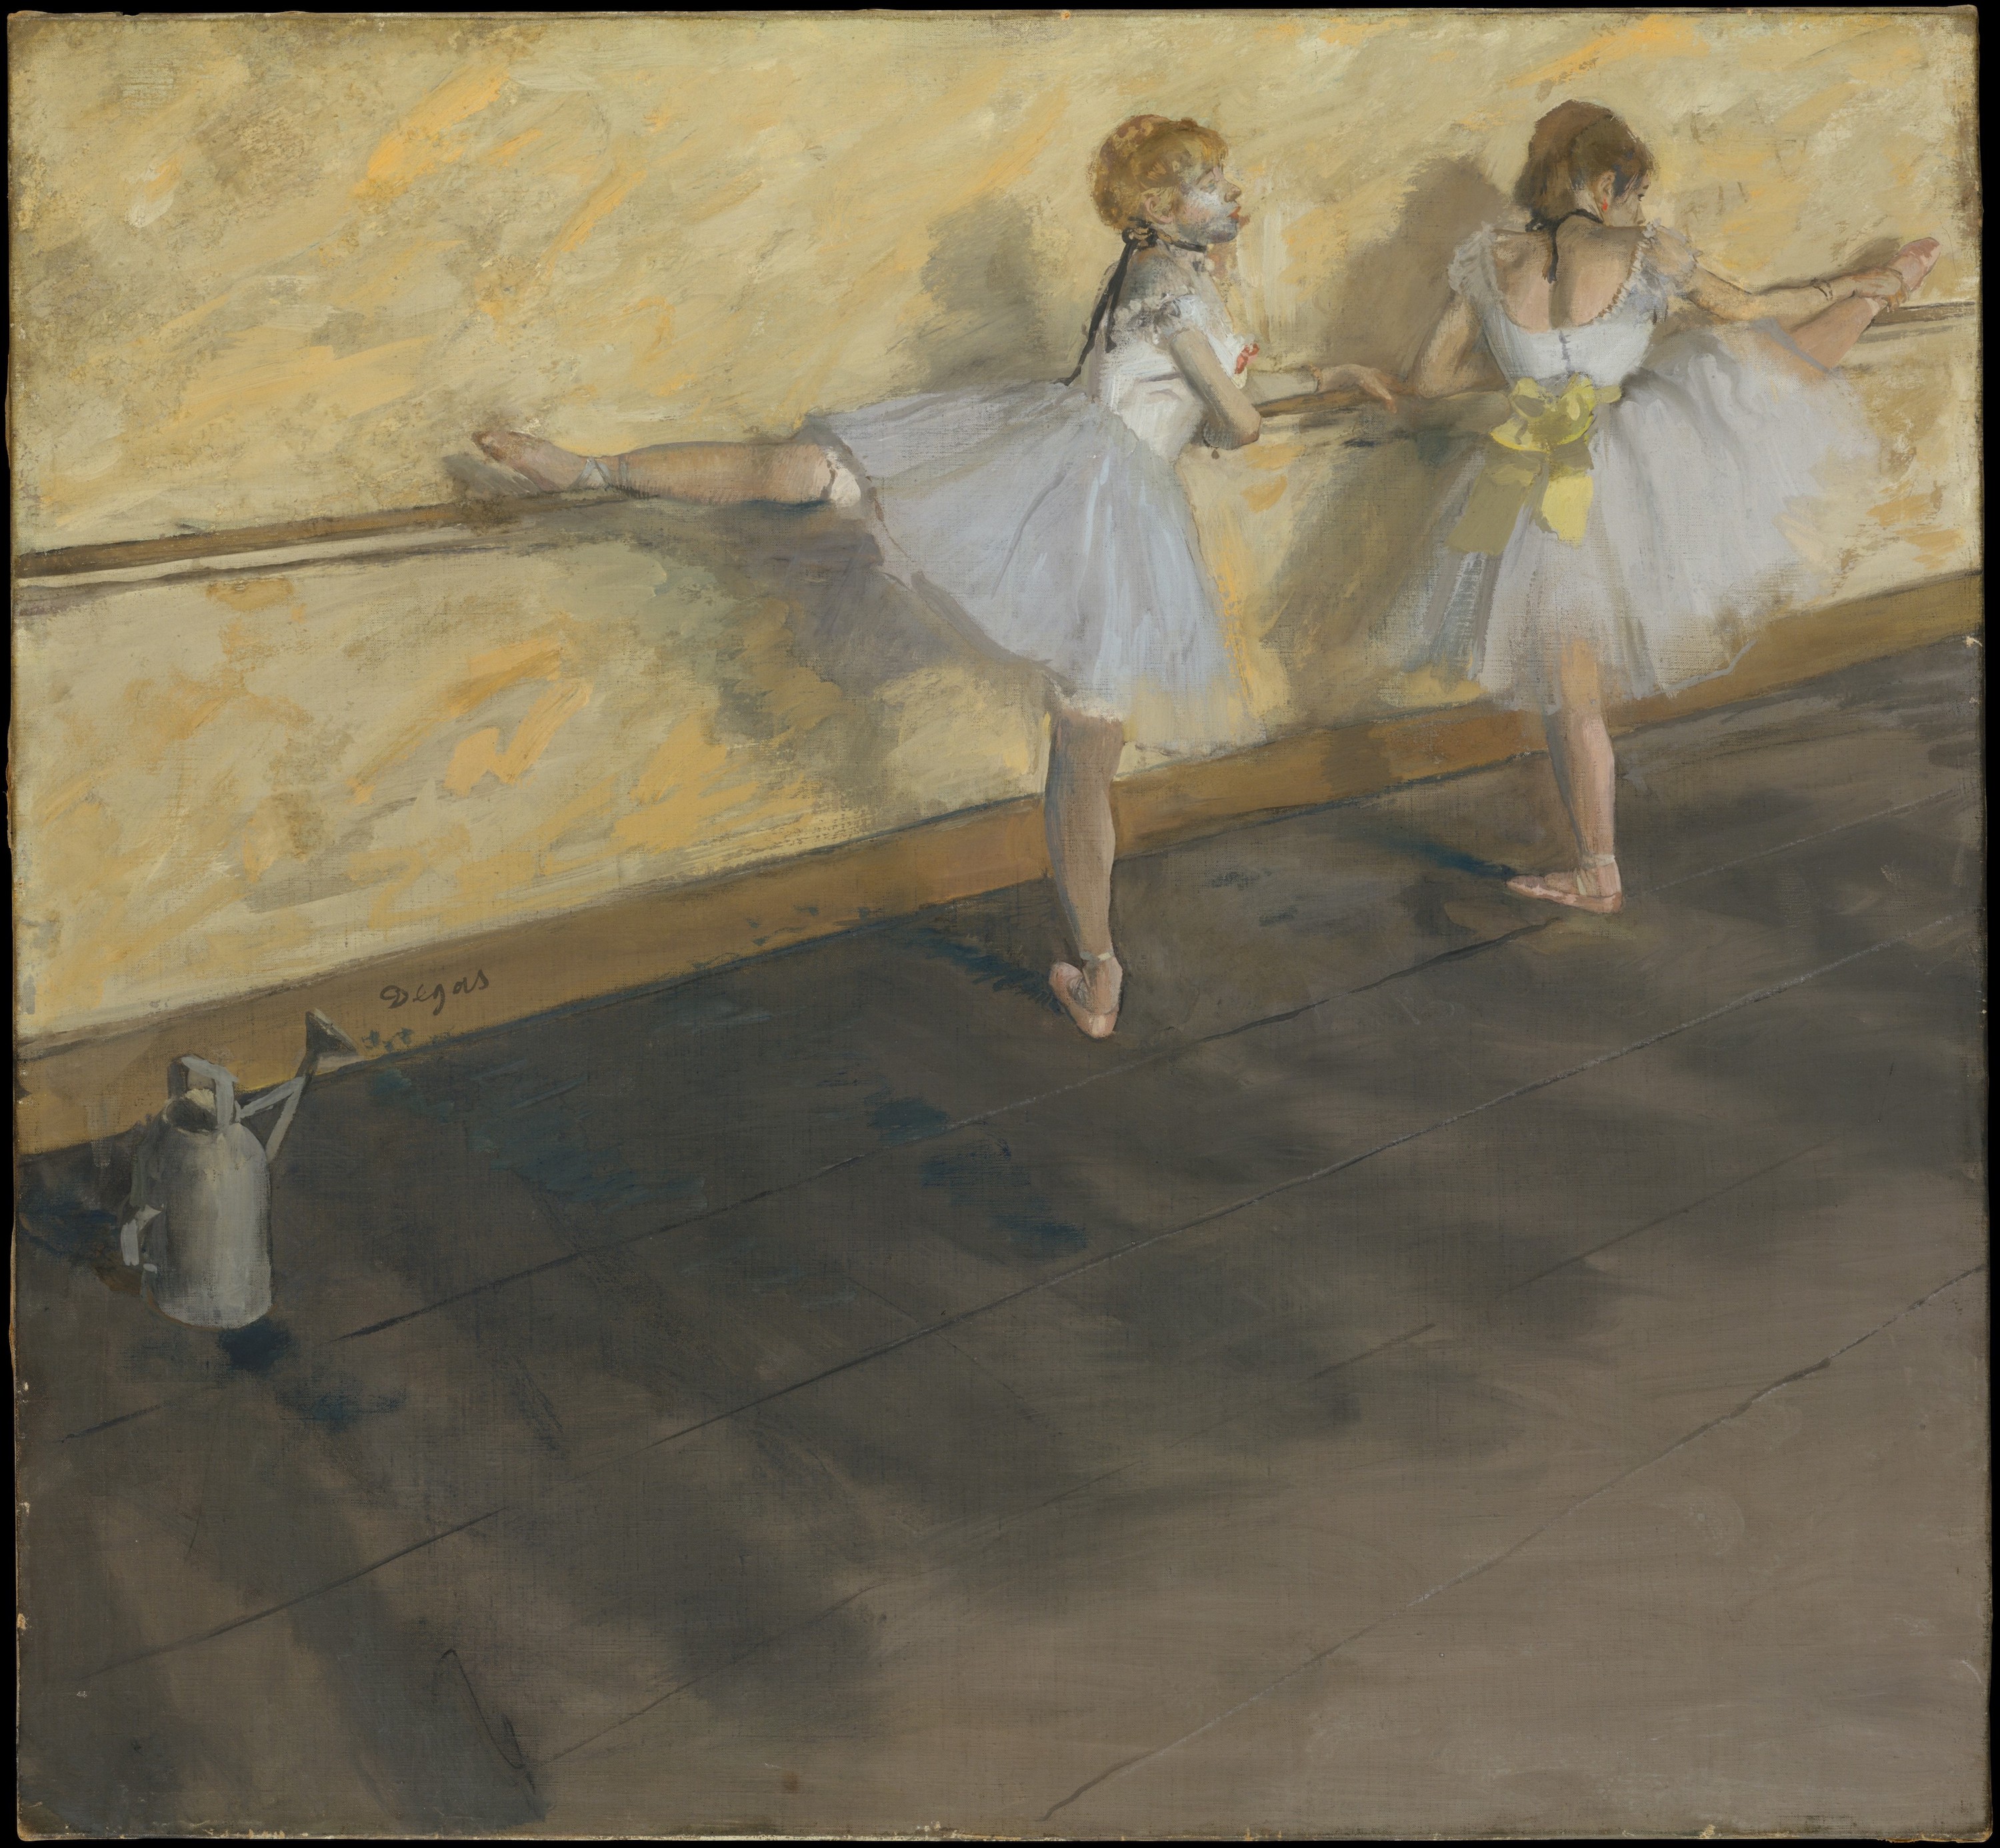 Dancers Practicing at the Barre by Edgar Degas - 1877 - 75.6 x 81.3 cm Metropolitan Museum of Art